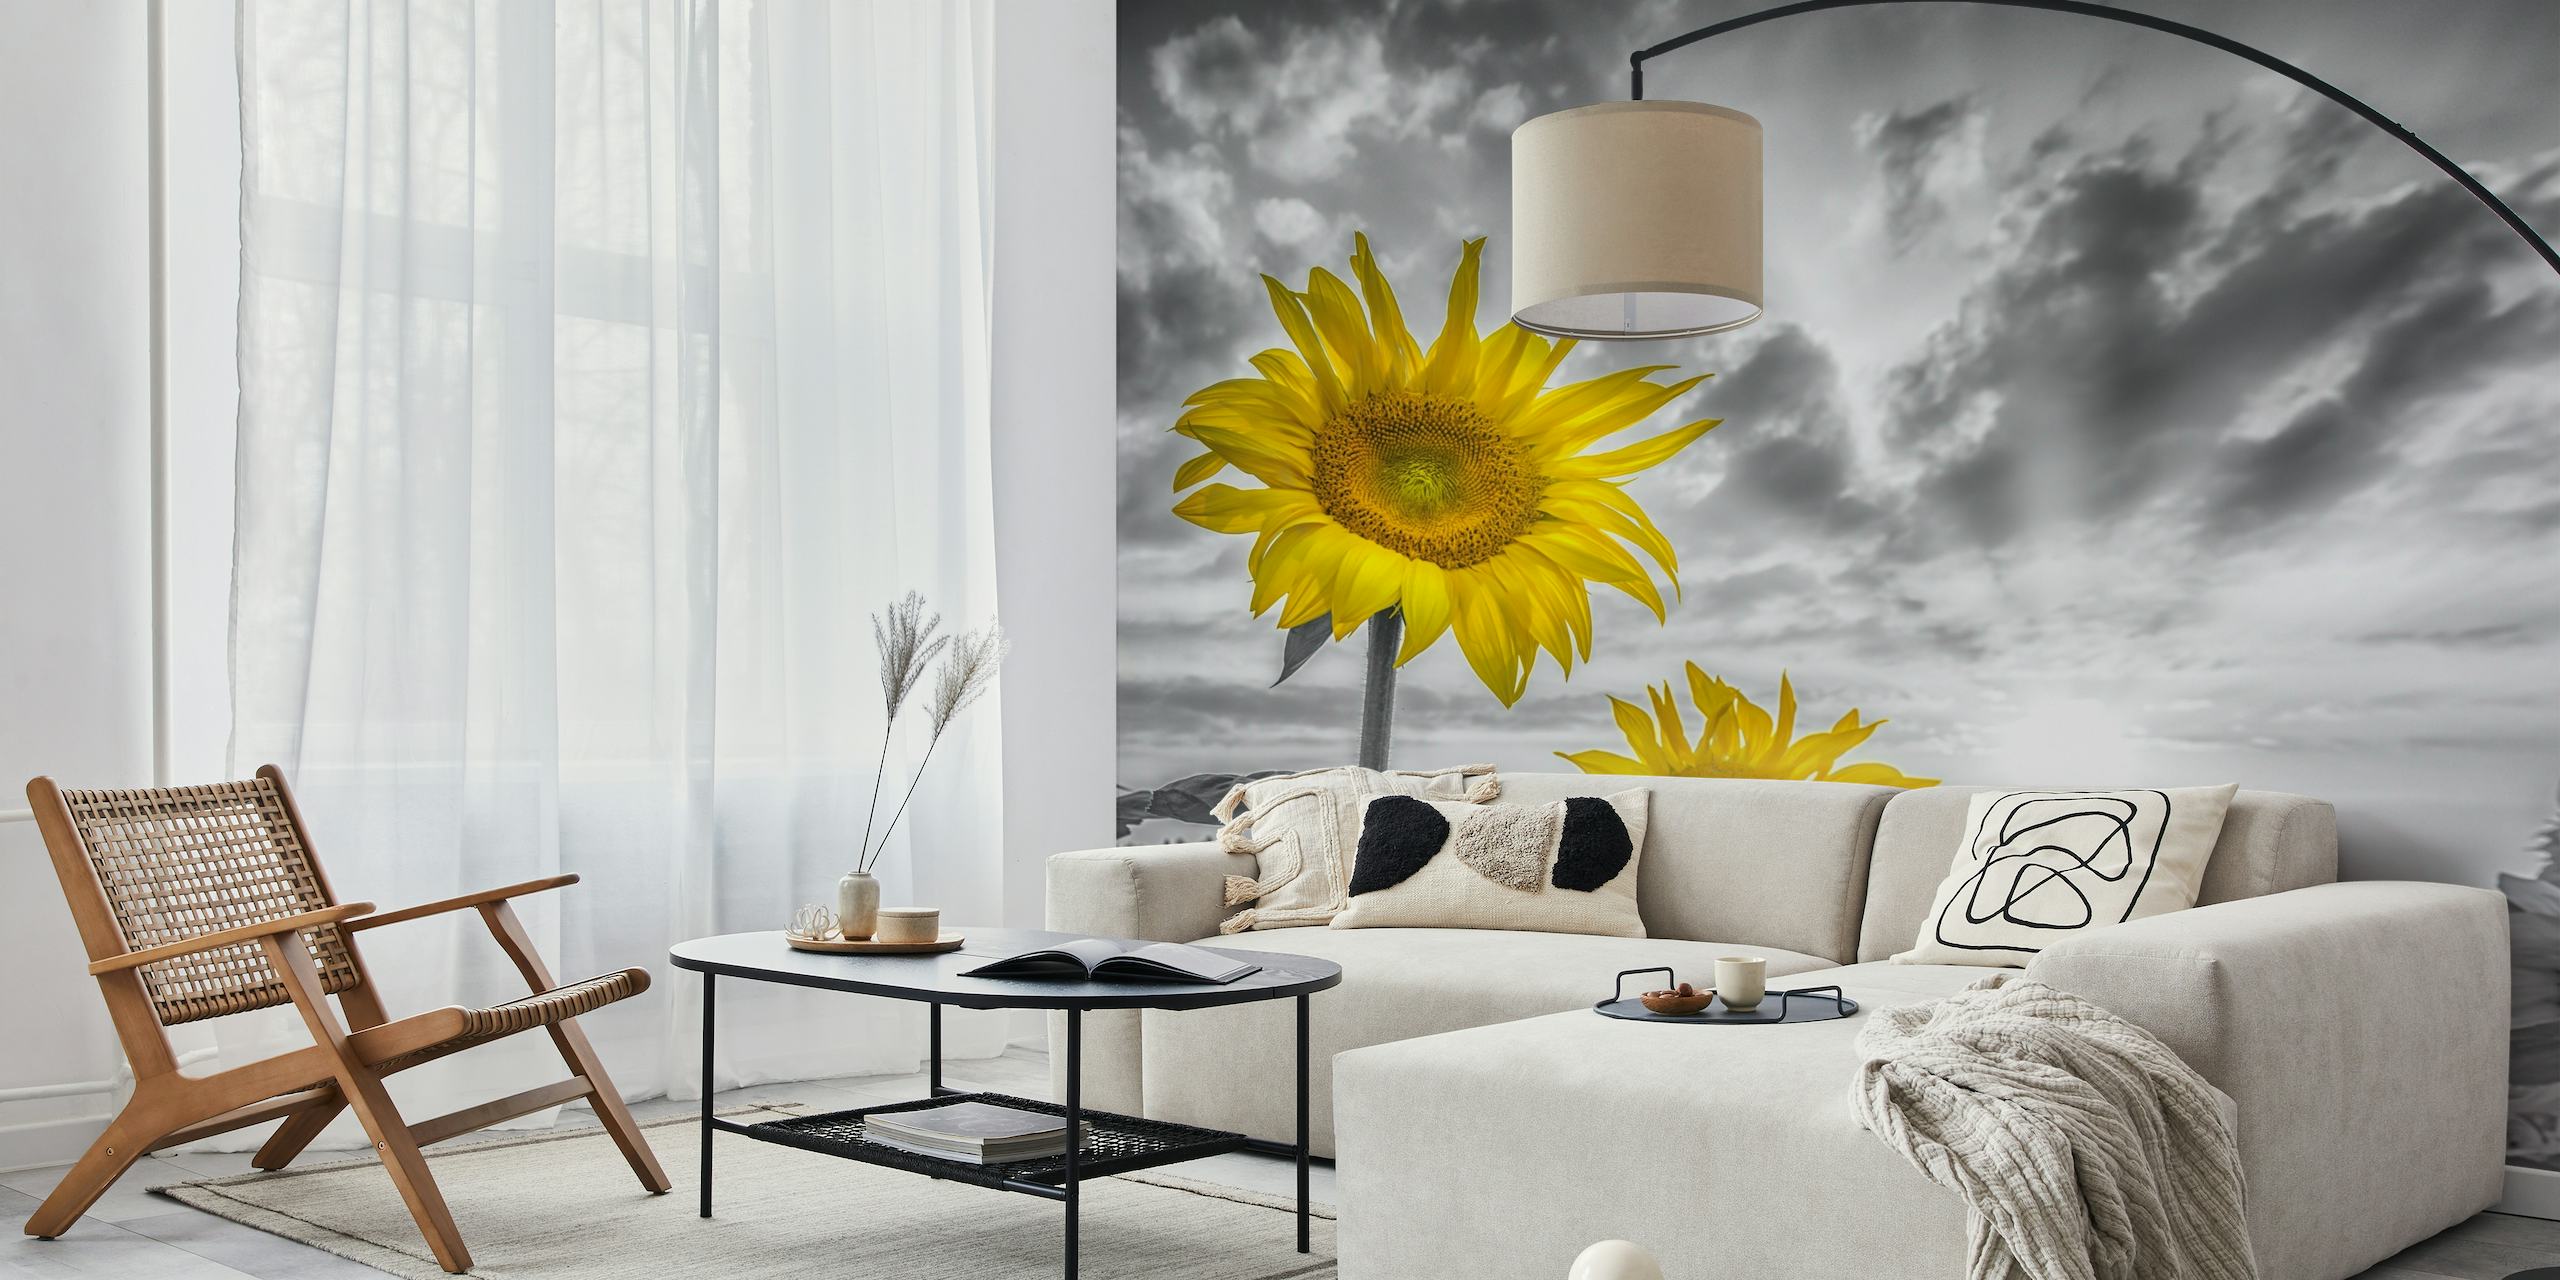 Focus on two sunflowers papel pintado